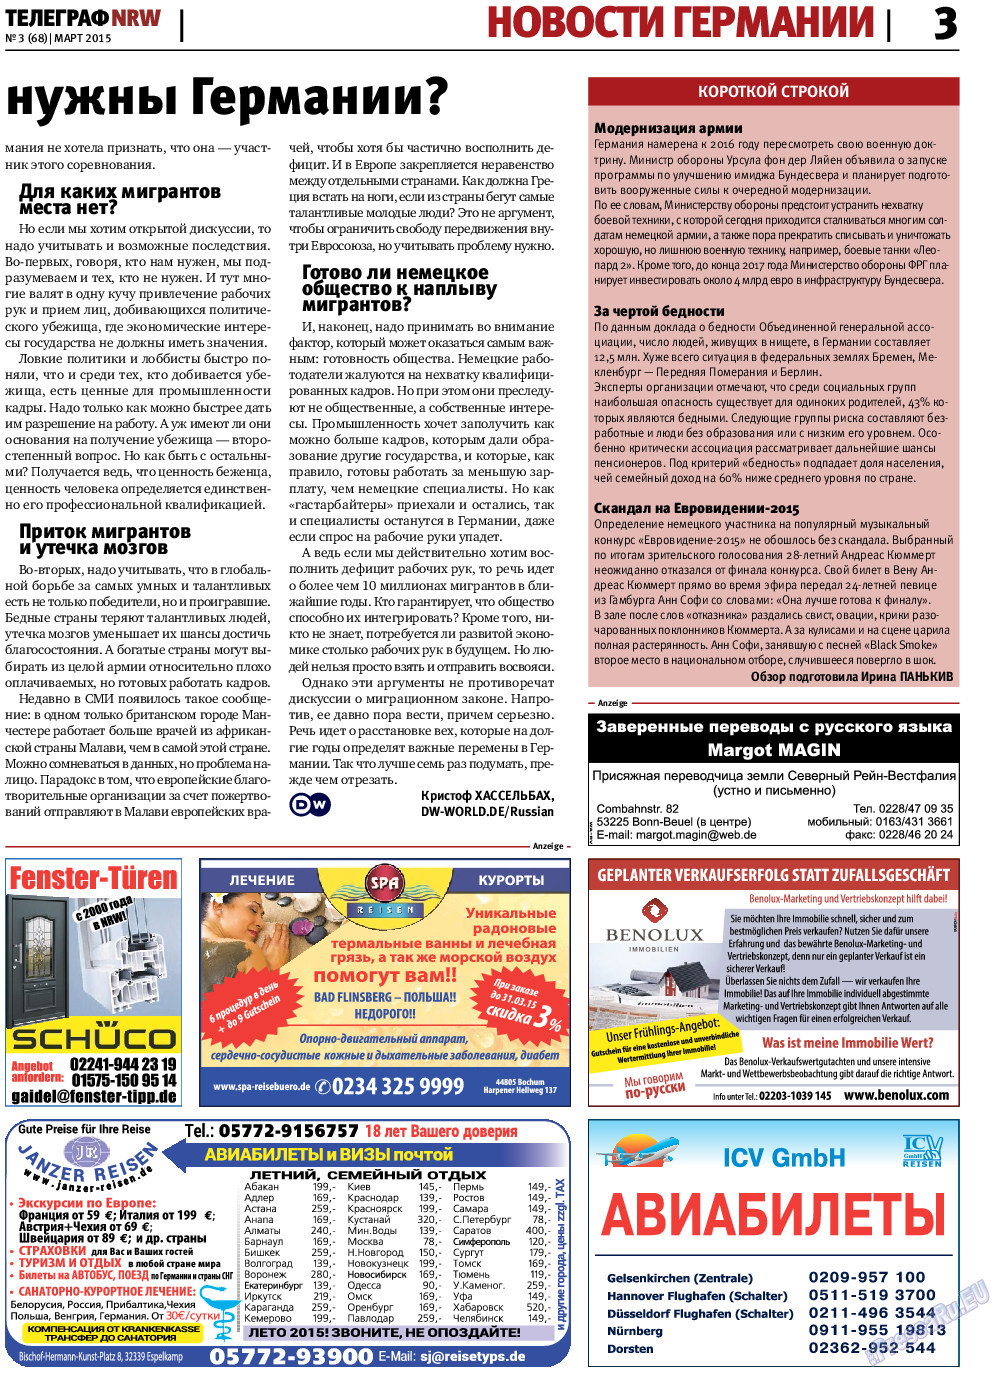 Телеграф NRW, газета. 2015 №3 стр.3